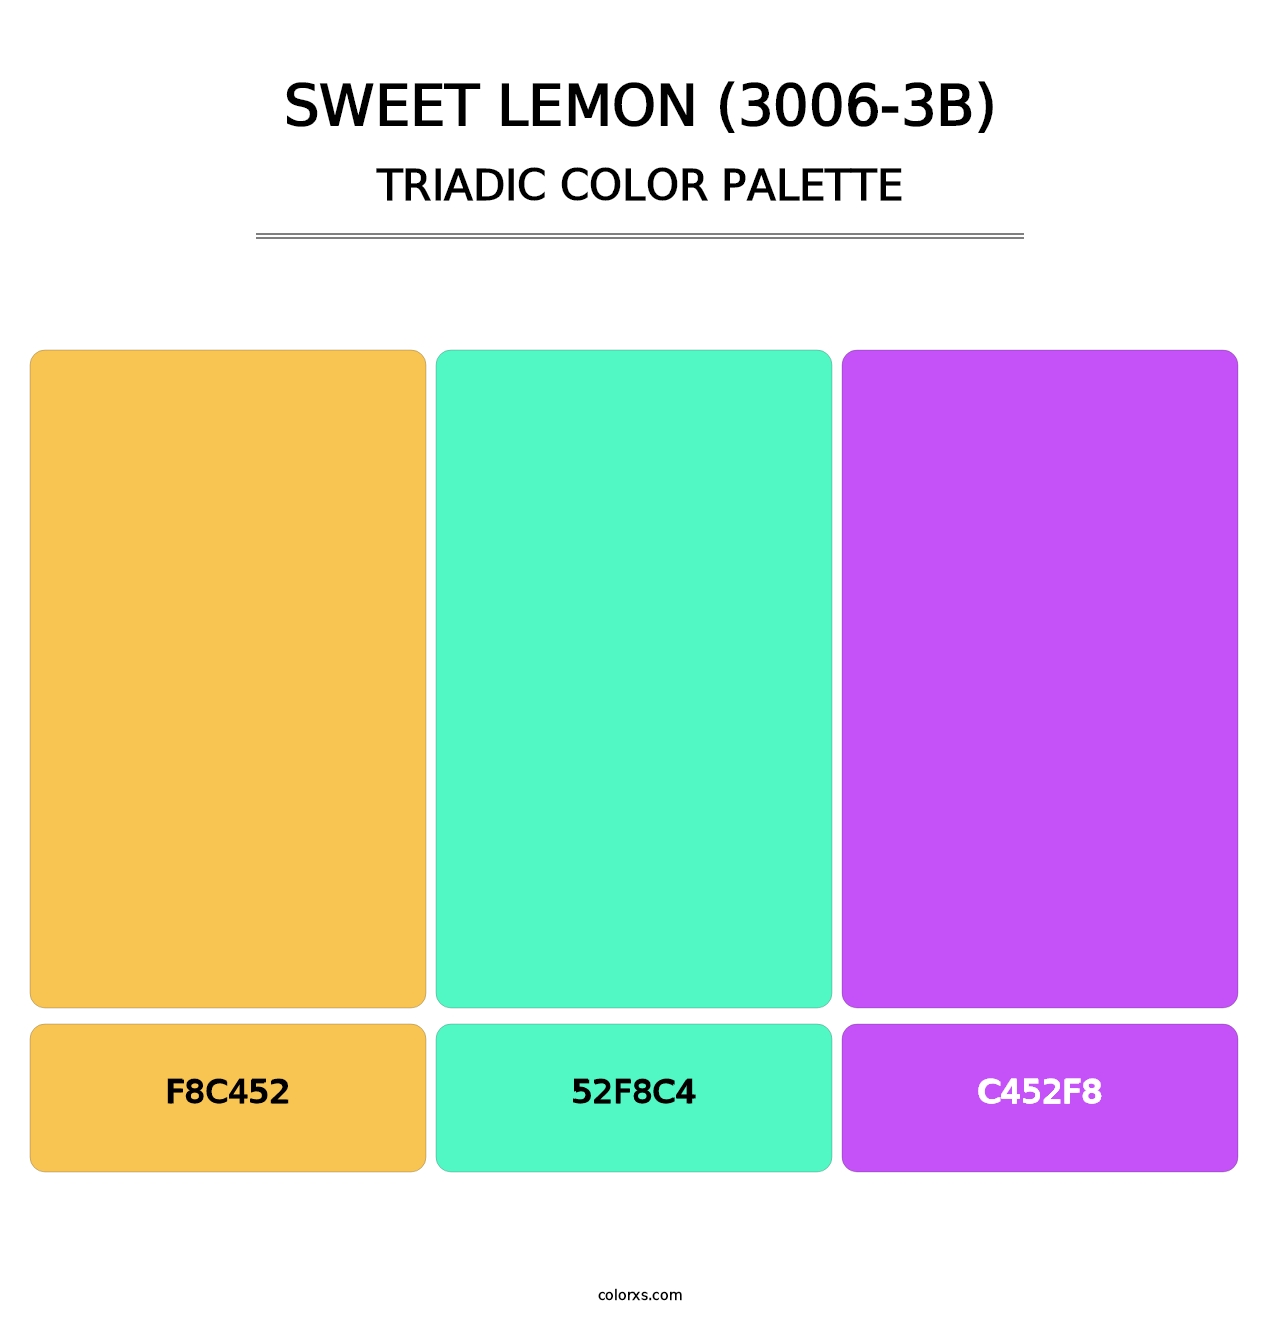 Sweet Lemon (3006-3B) - Triadic Color Palette